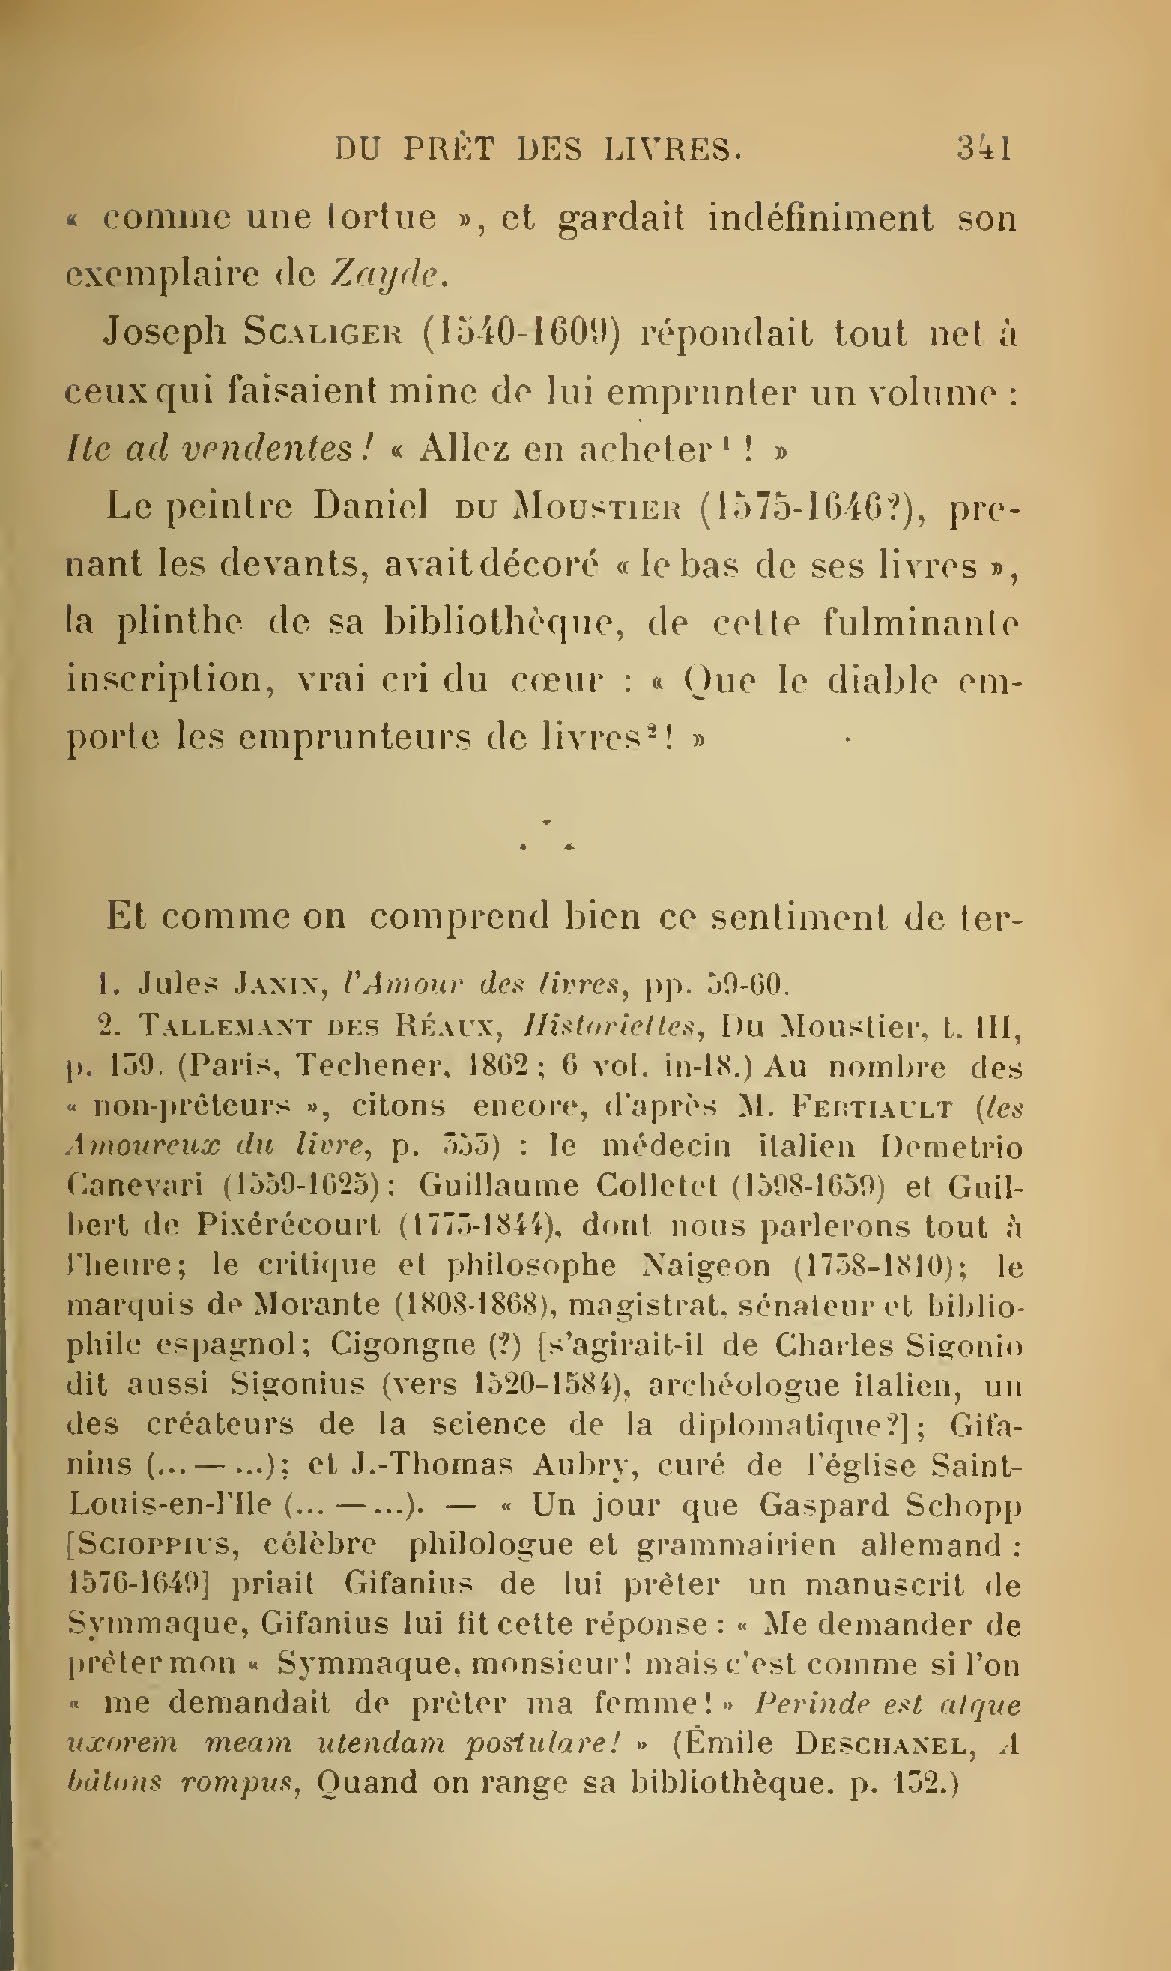 Albert Cim, Le Livre, t. II, p. 341.